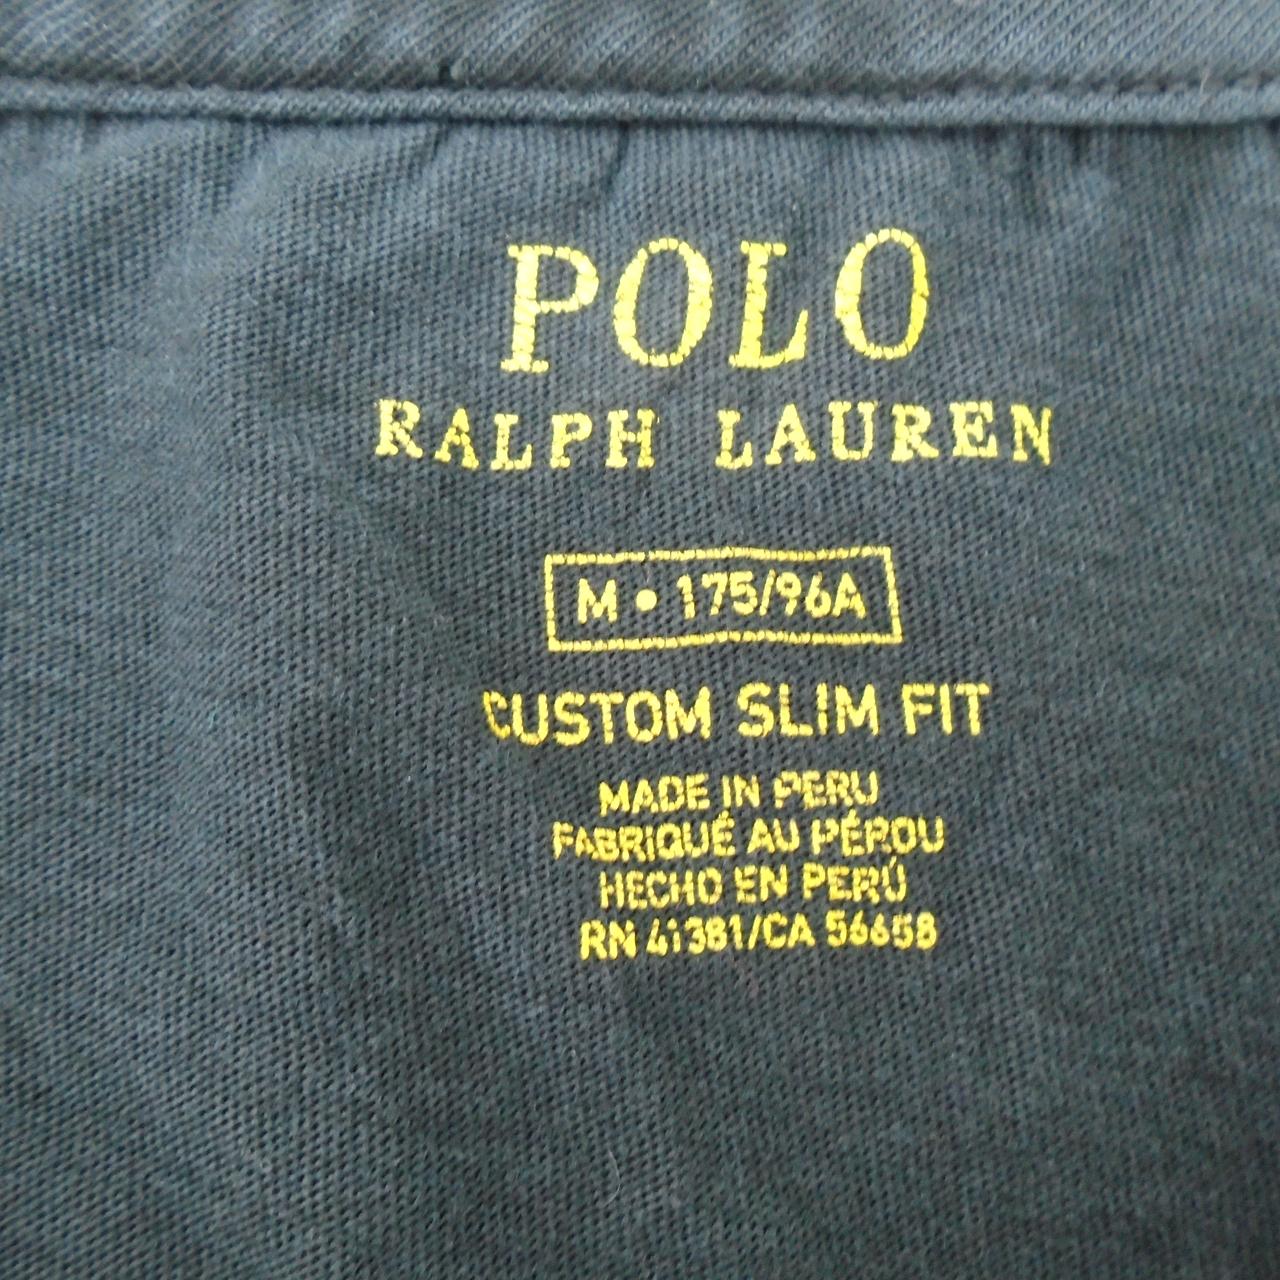 Herren-T-Shirt Ralph Lauren. Schwarz. M. Gebraucht. Gut